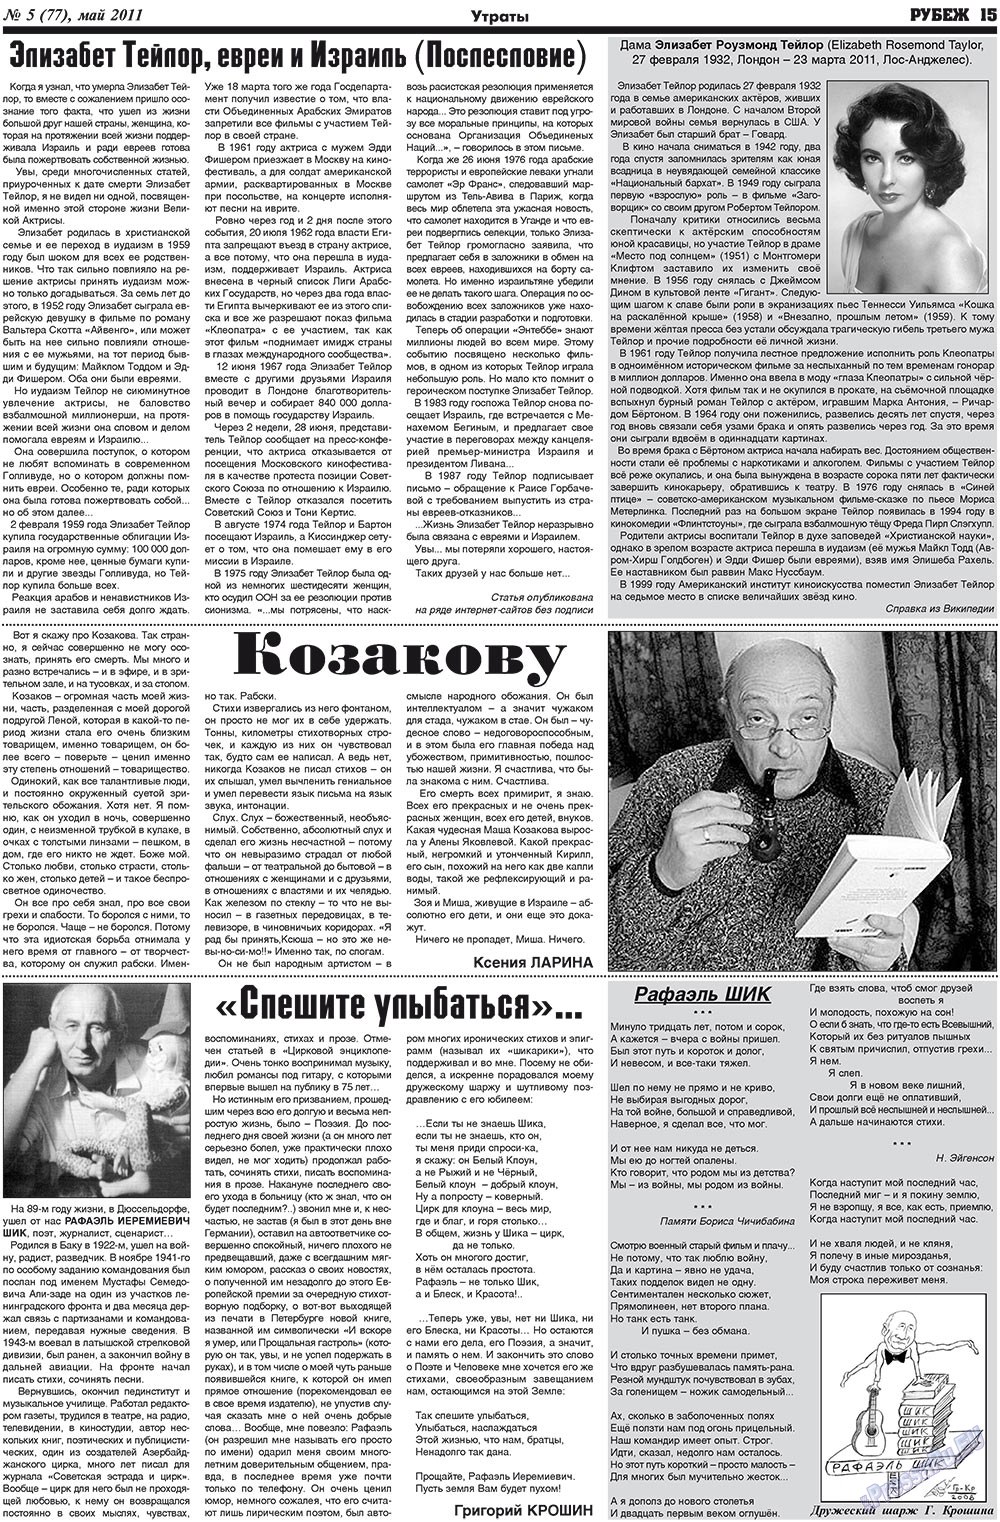 Рубеж, газета. 2011 №5 стр.15